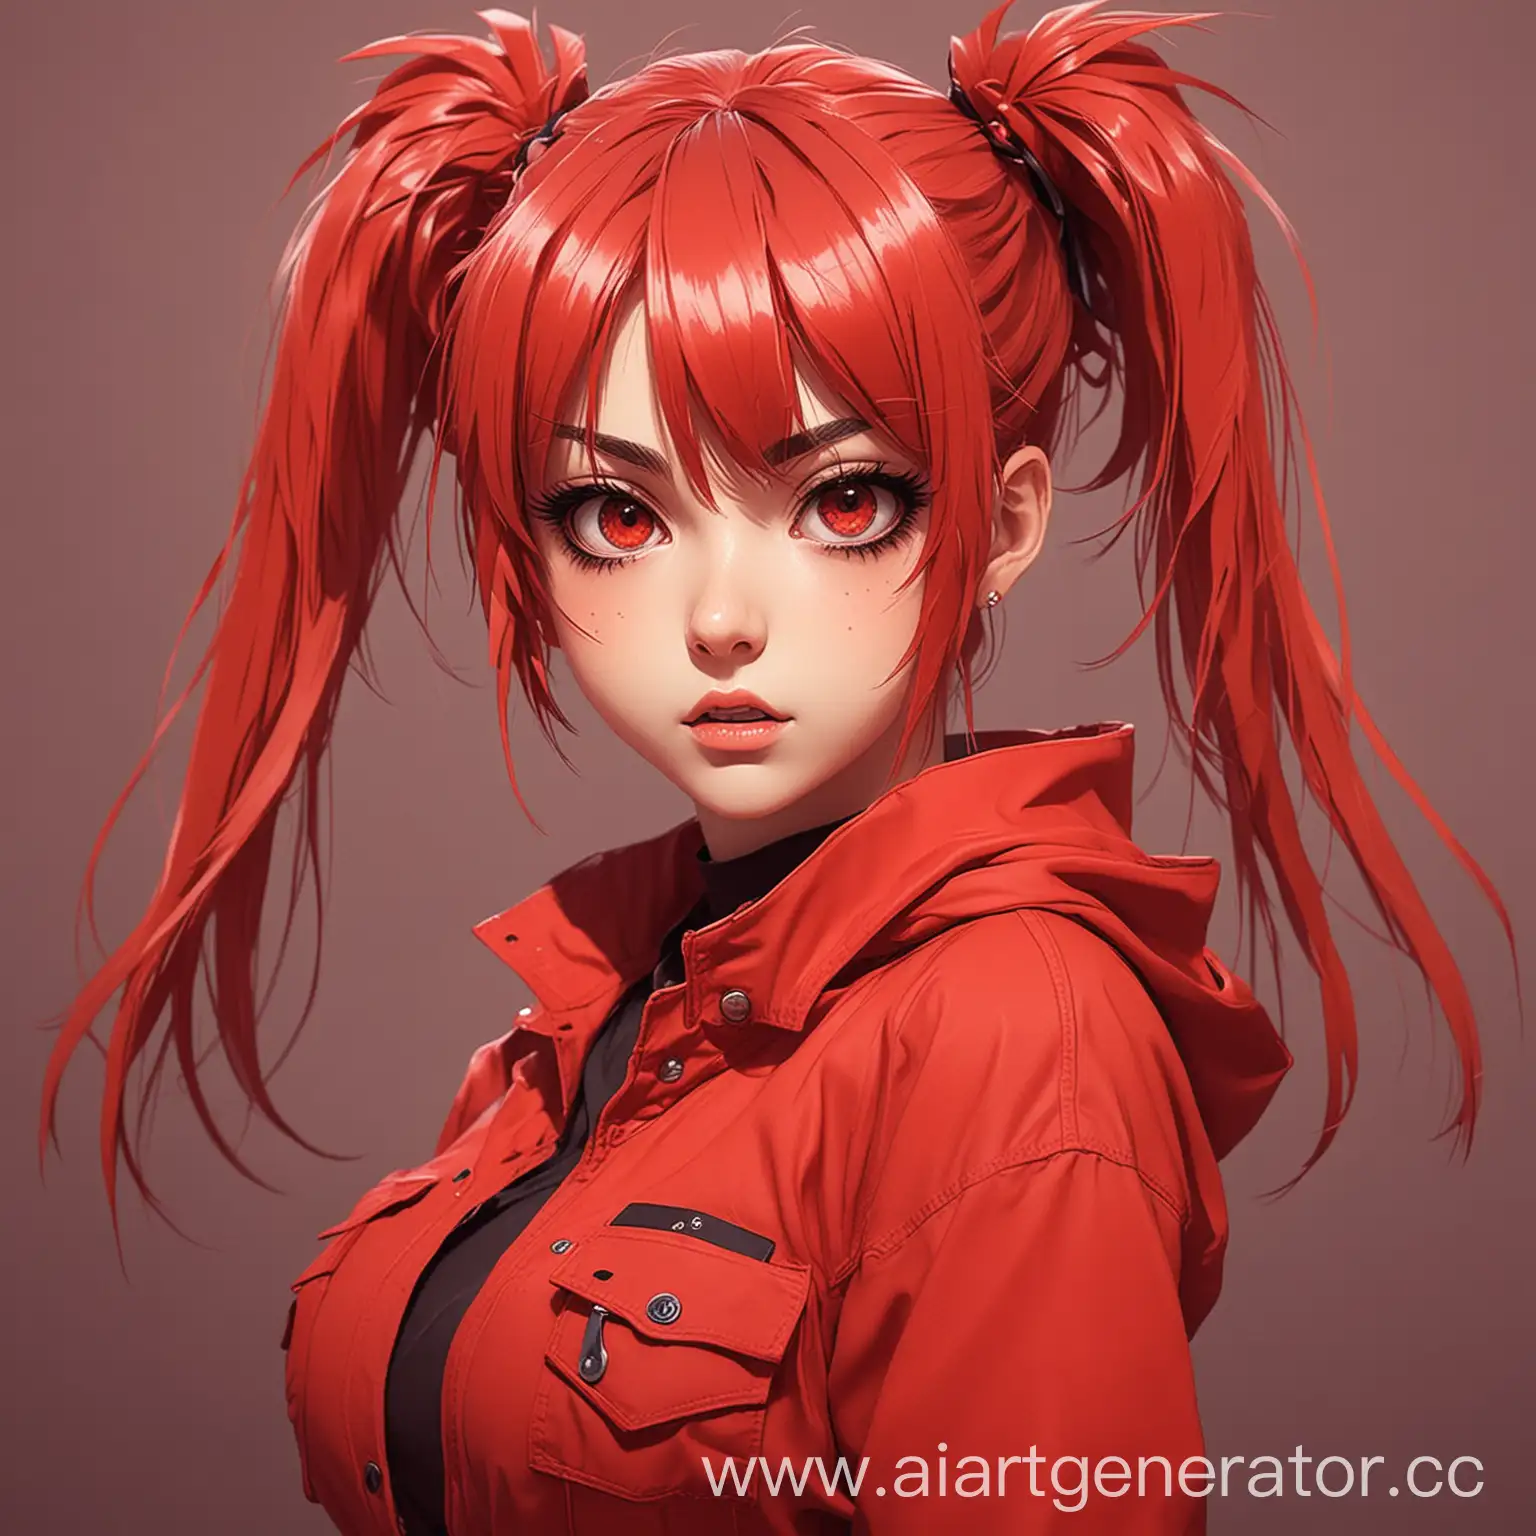 Fiery-Anime-Girl-in-Red-Attire-Intense-Manga-Character-Art